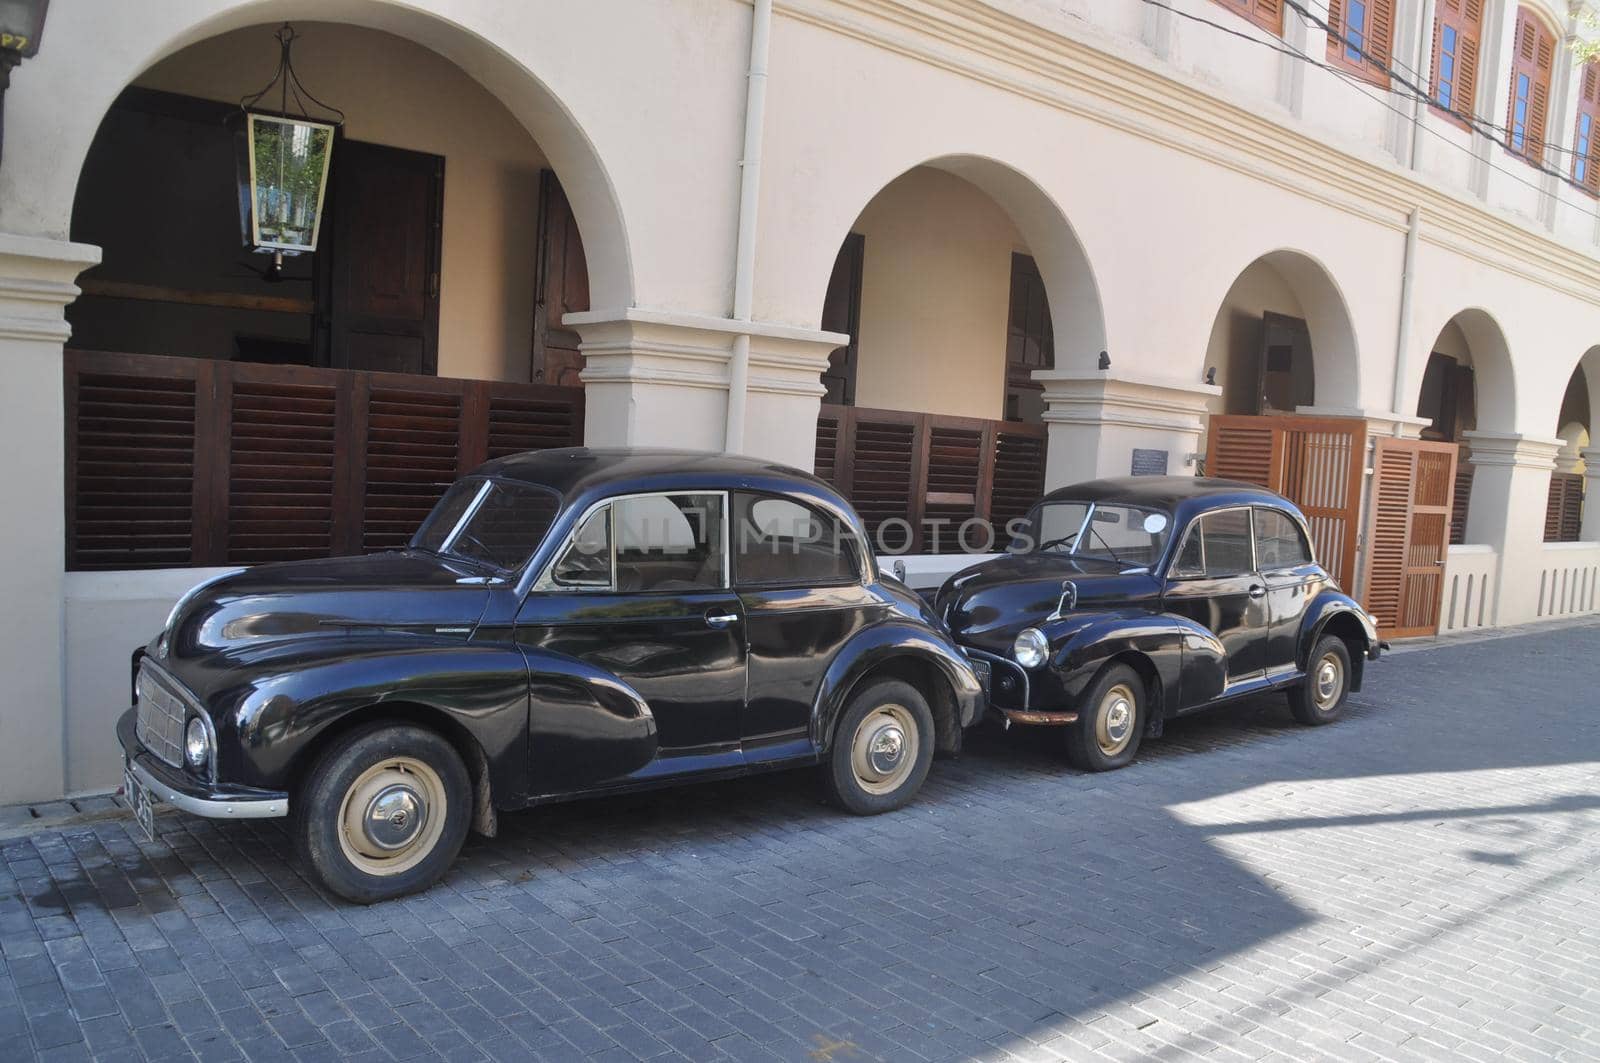 Restored cars in the city of Galle, Sri Lanka.